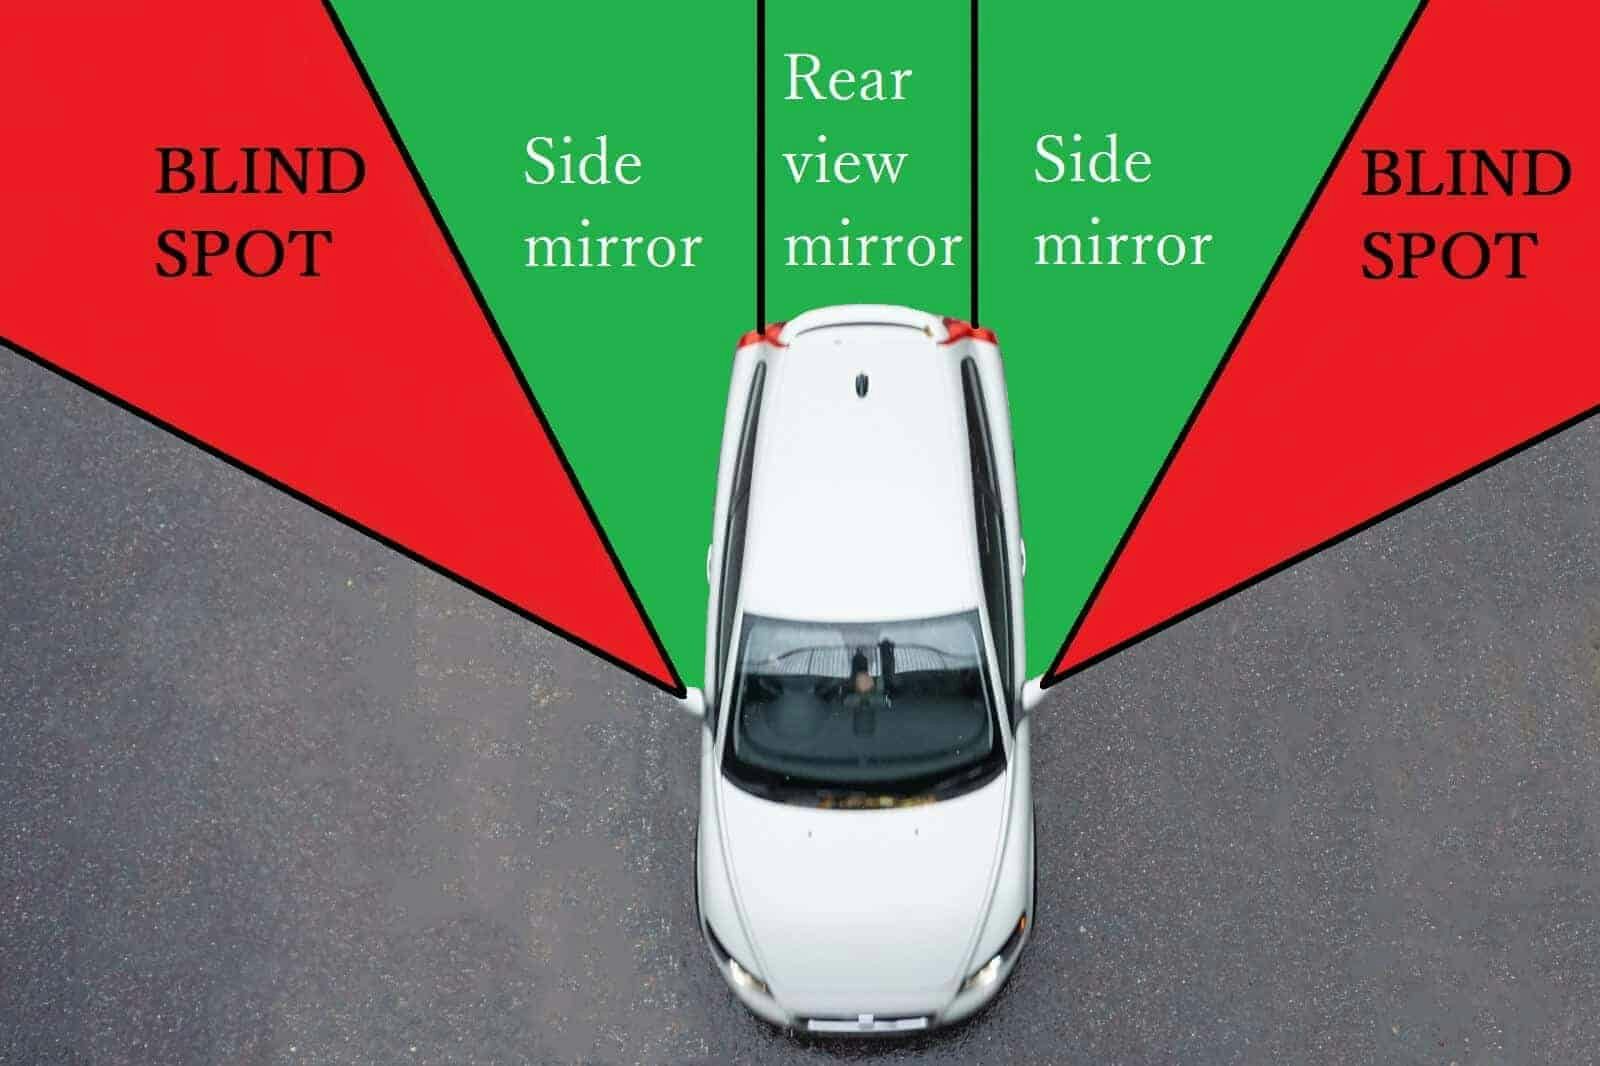 Vehicle blind spots to avoid